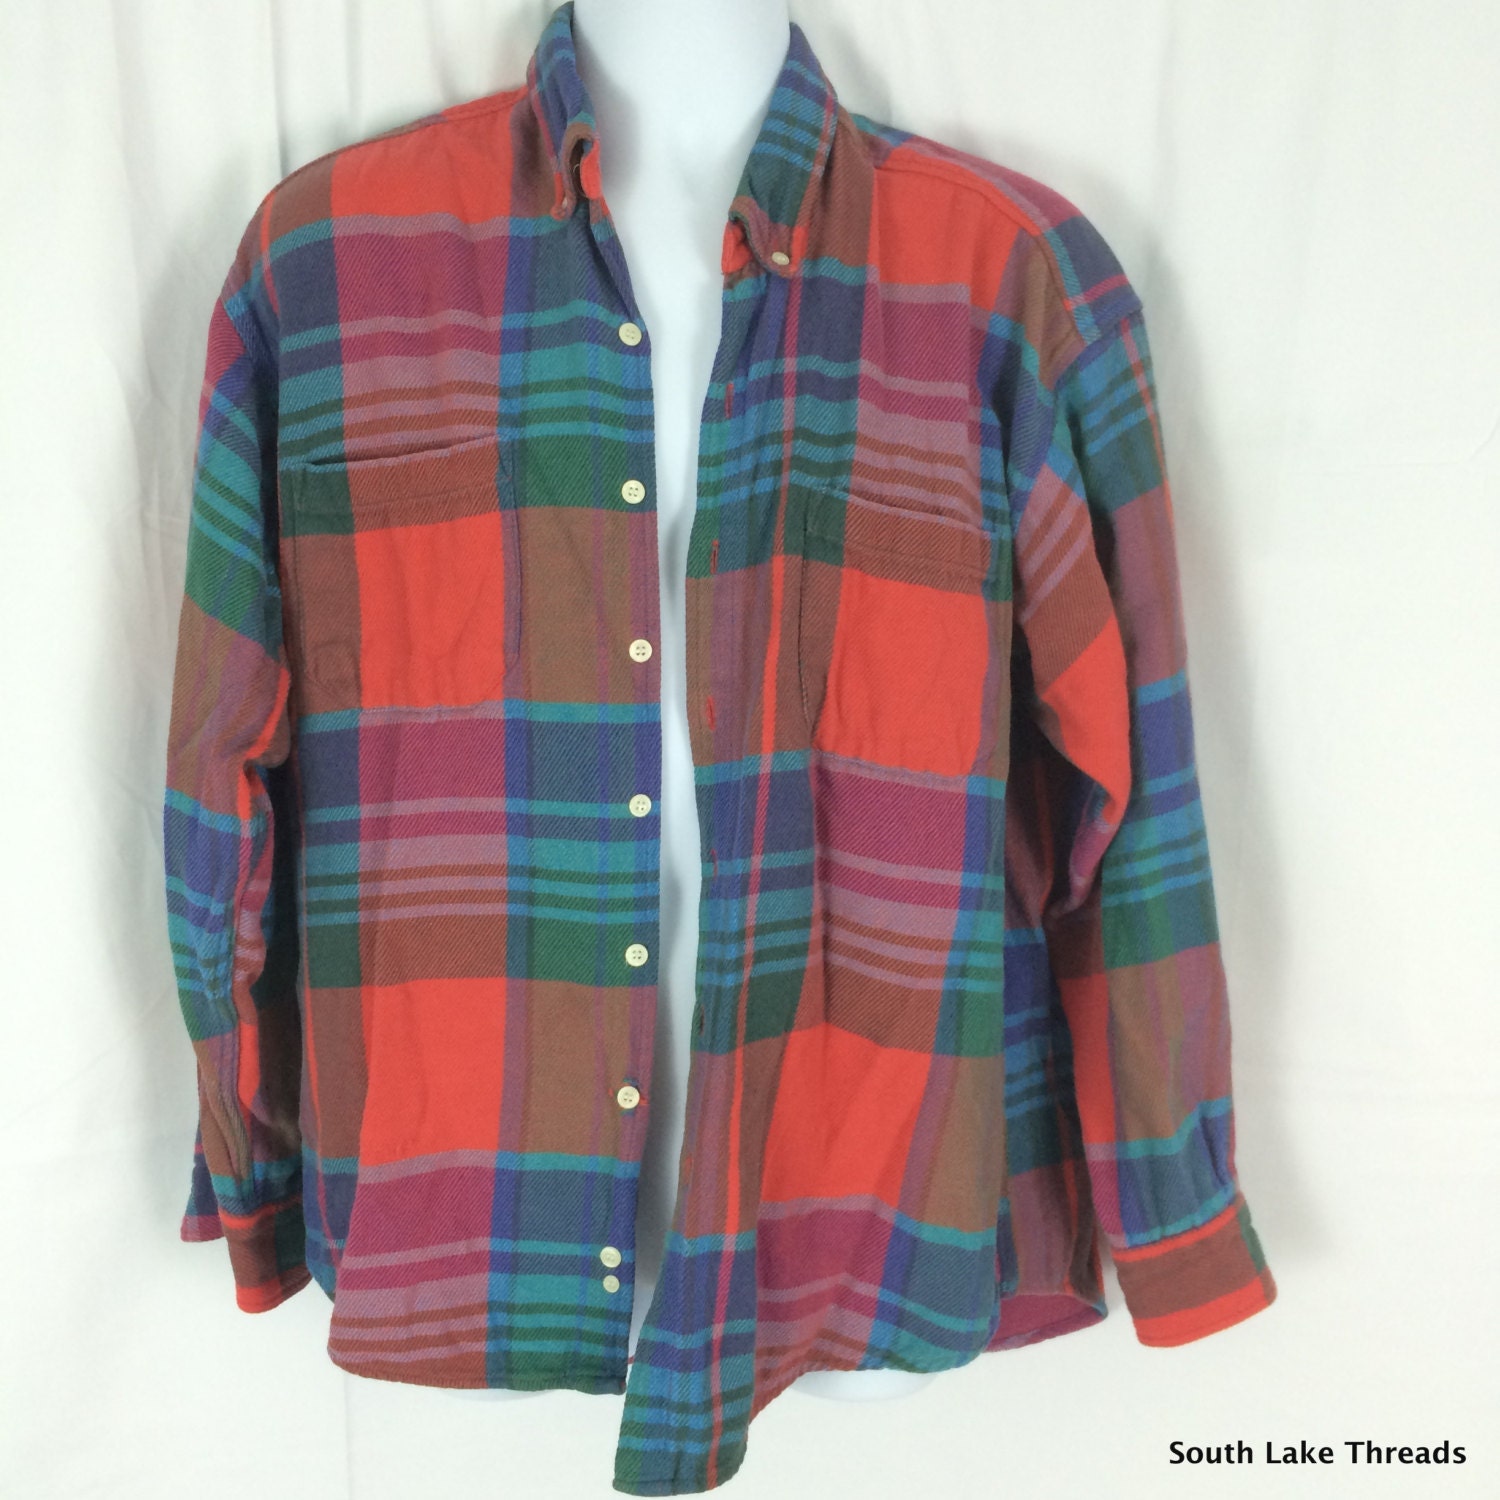 Vintage Gap Red Plaid flannel shirt size large great vintage